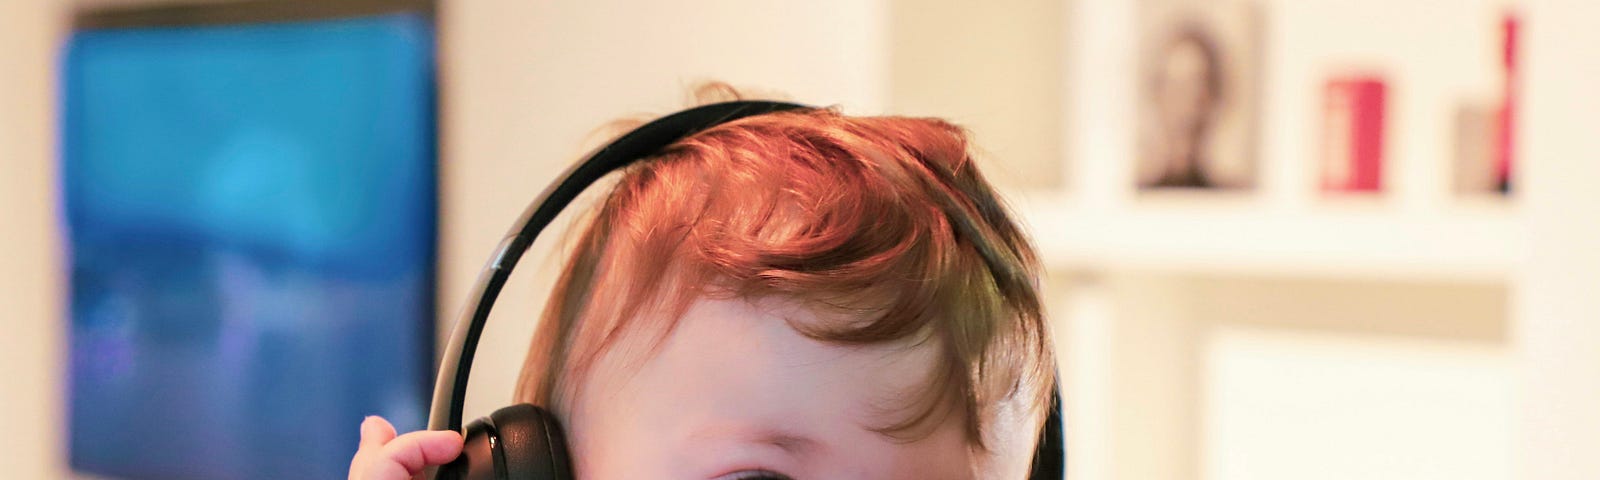 Small re-headed child listening on headphones